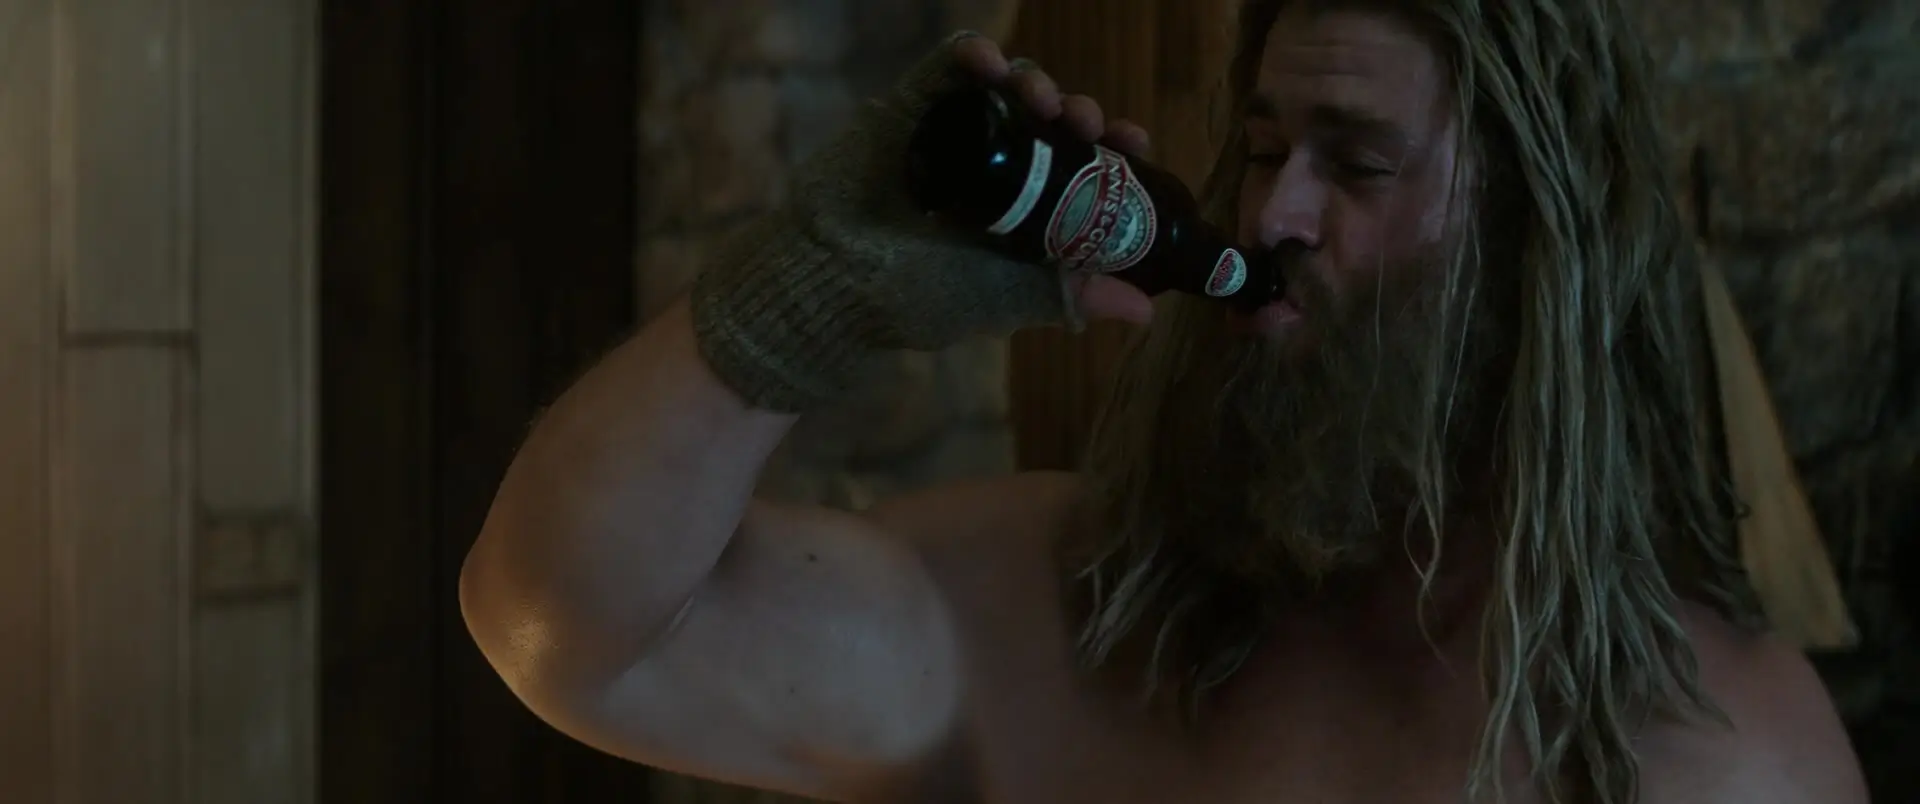 Vingadores: Ultimato - Thor bebendo a cerveja escocesa Innis e Gunn